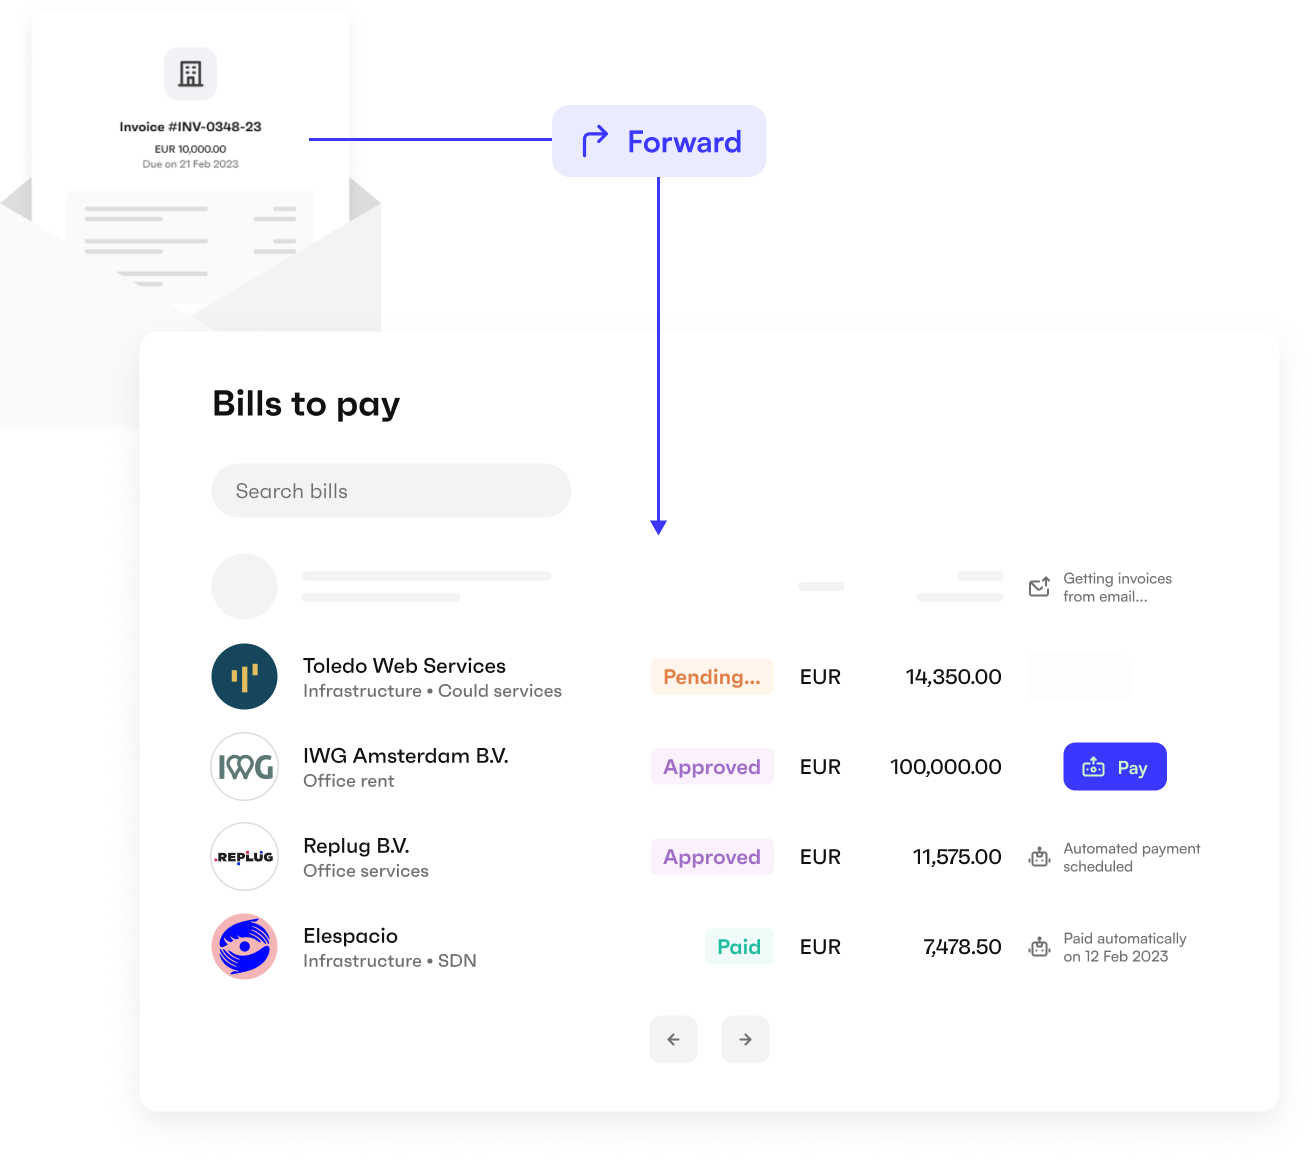 Monite's Accounts Payable API, collect bills